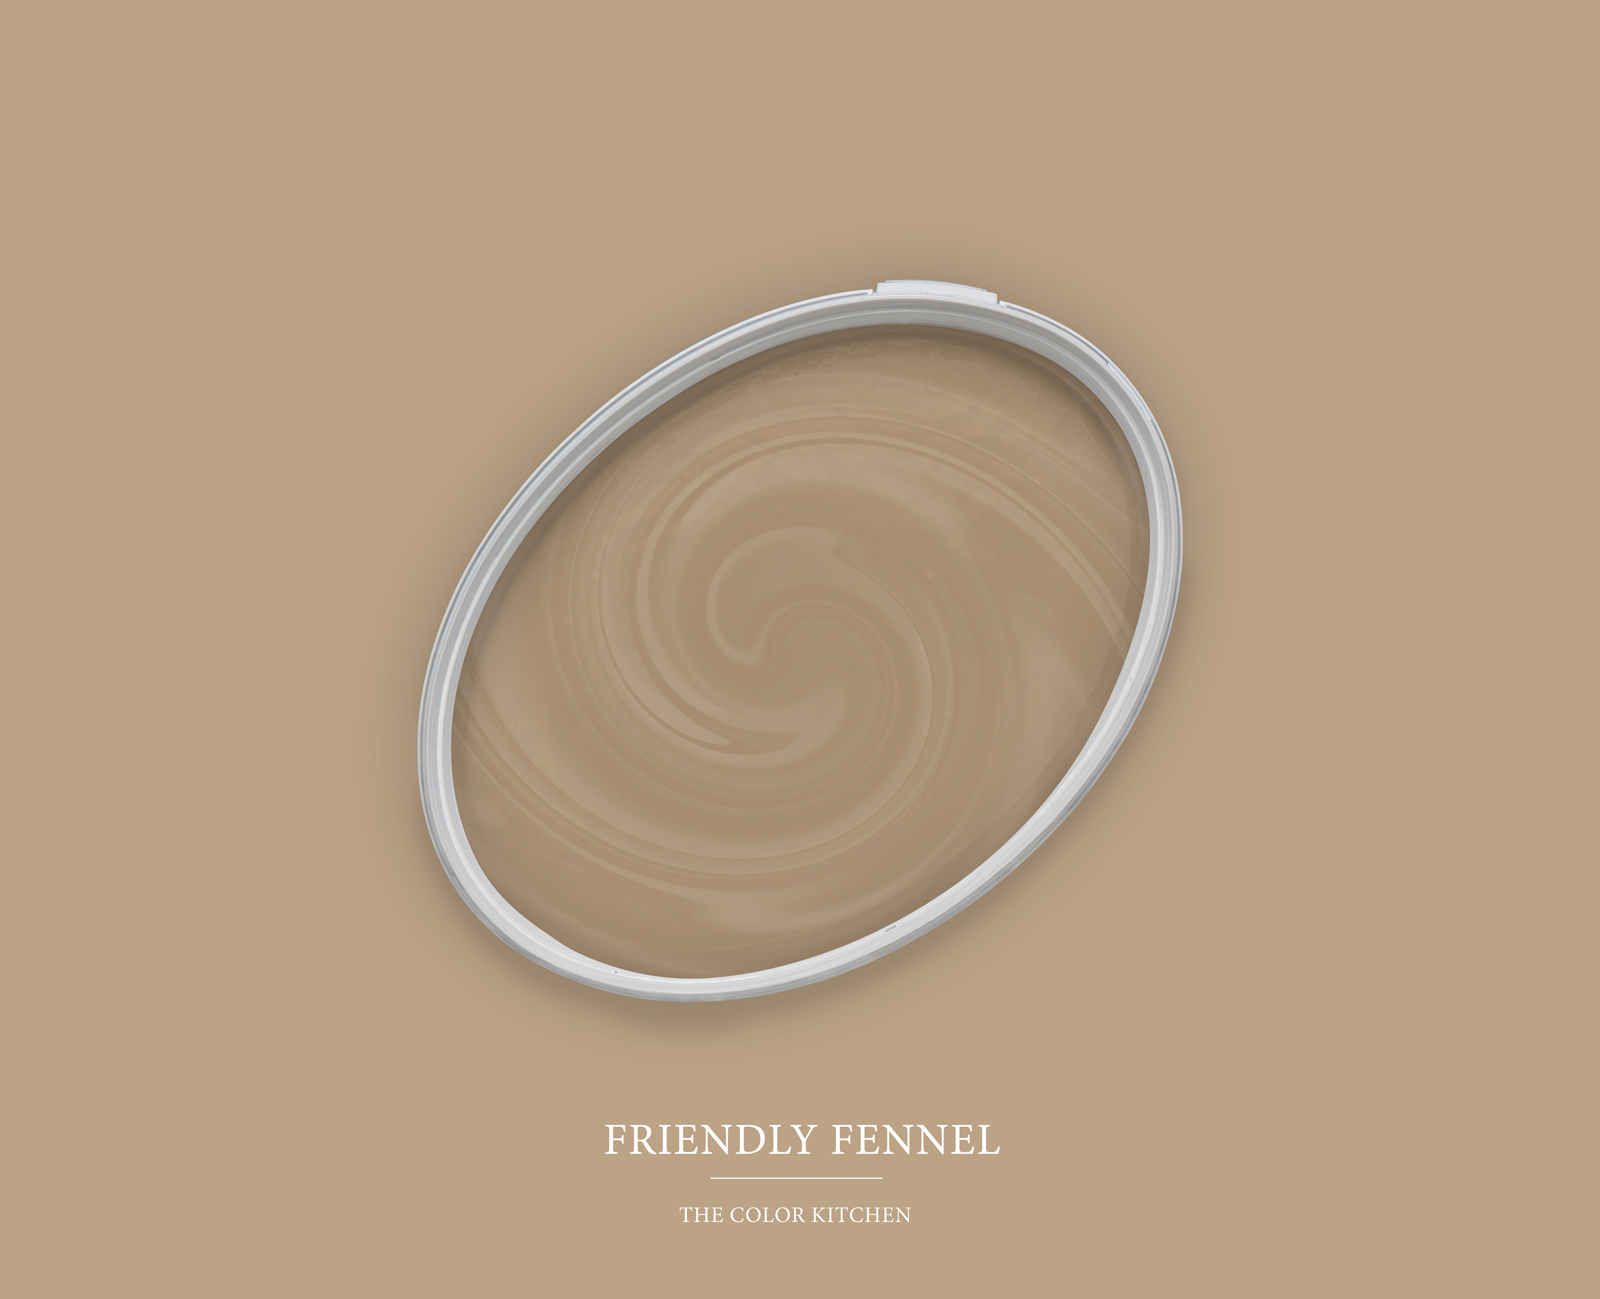         Wall Paint TCK6005 »Friendly Fennel« in homely beige brown – 2.5 litre
    